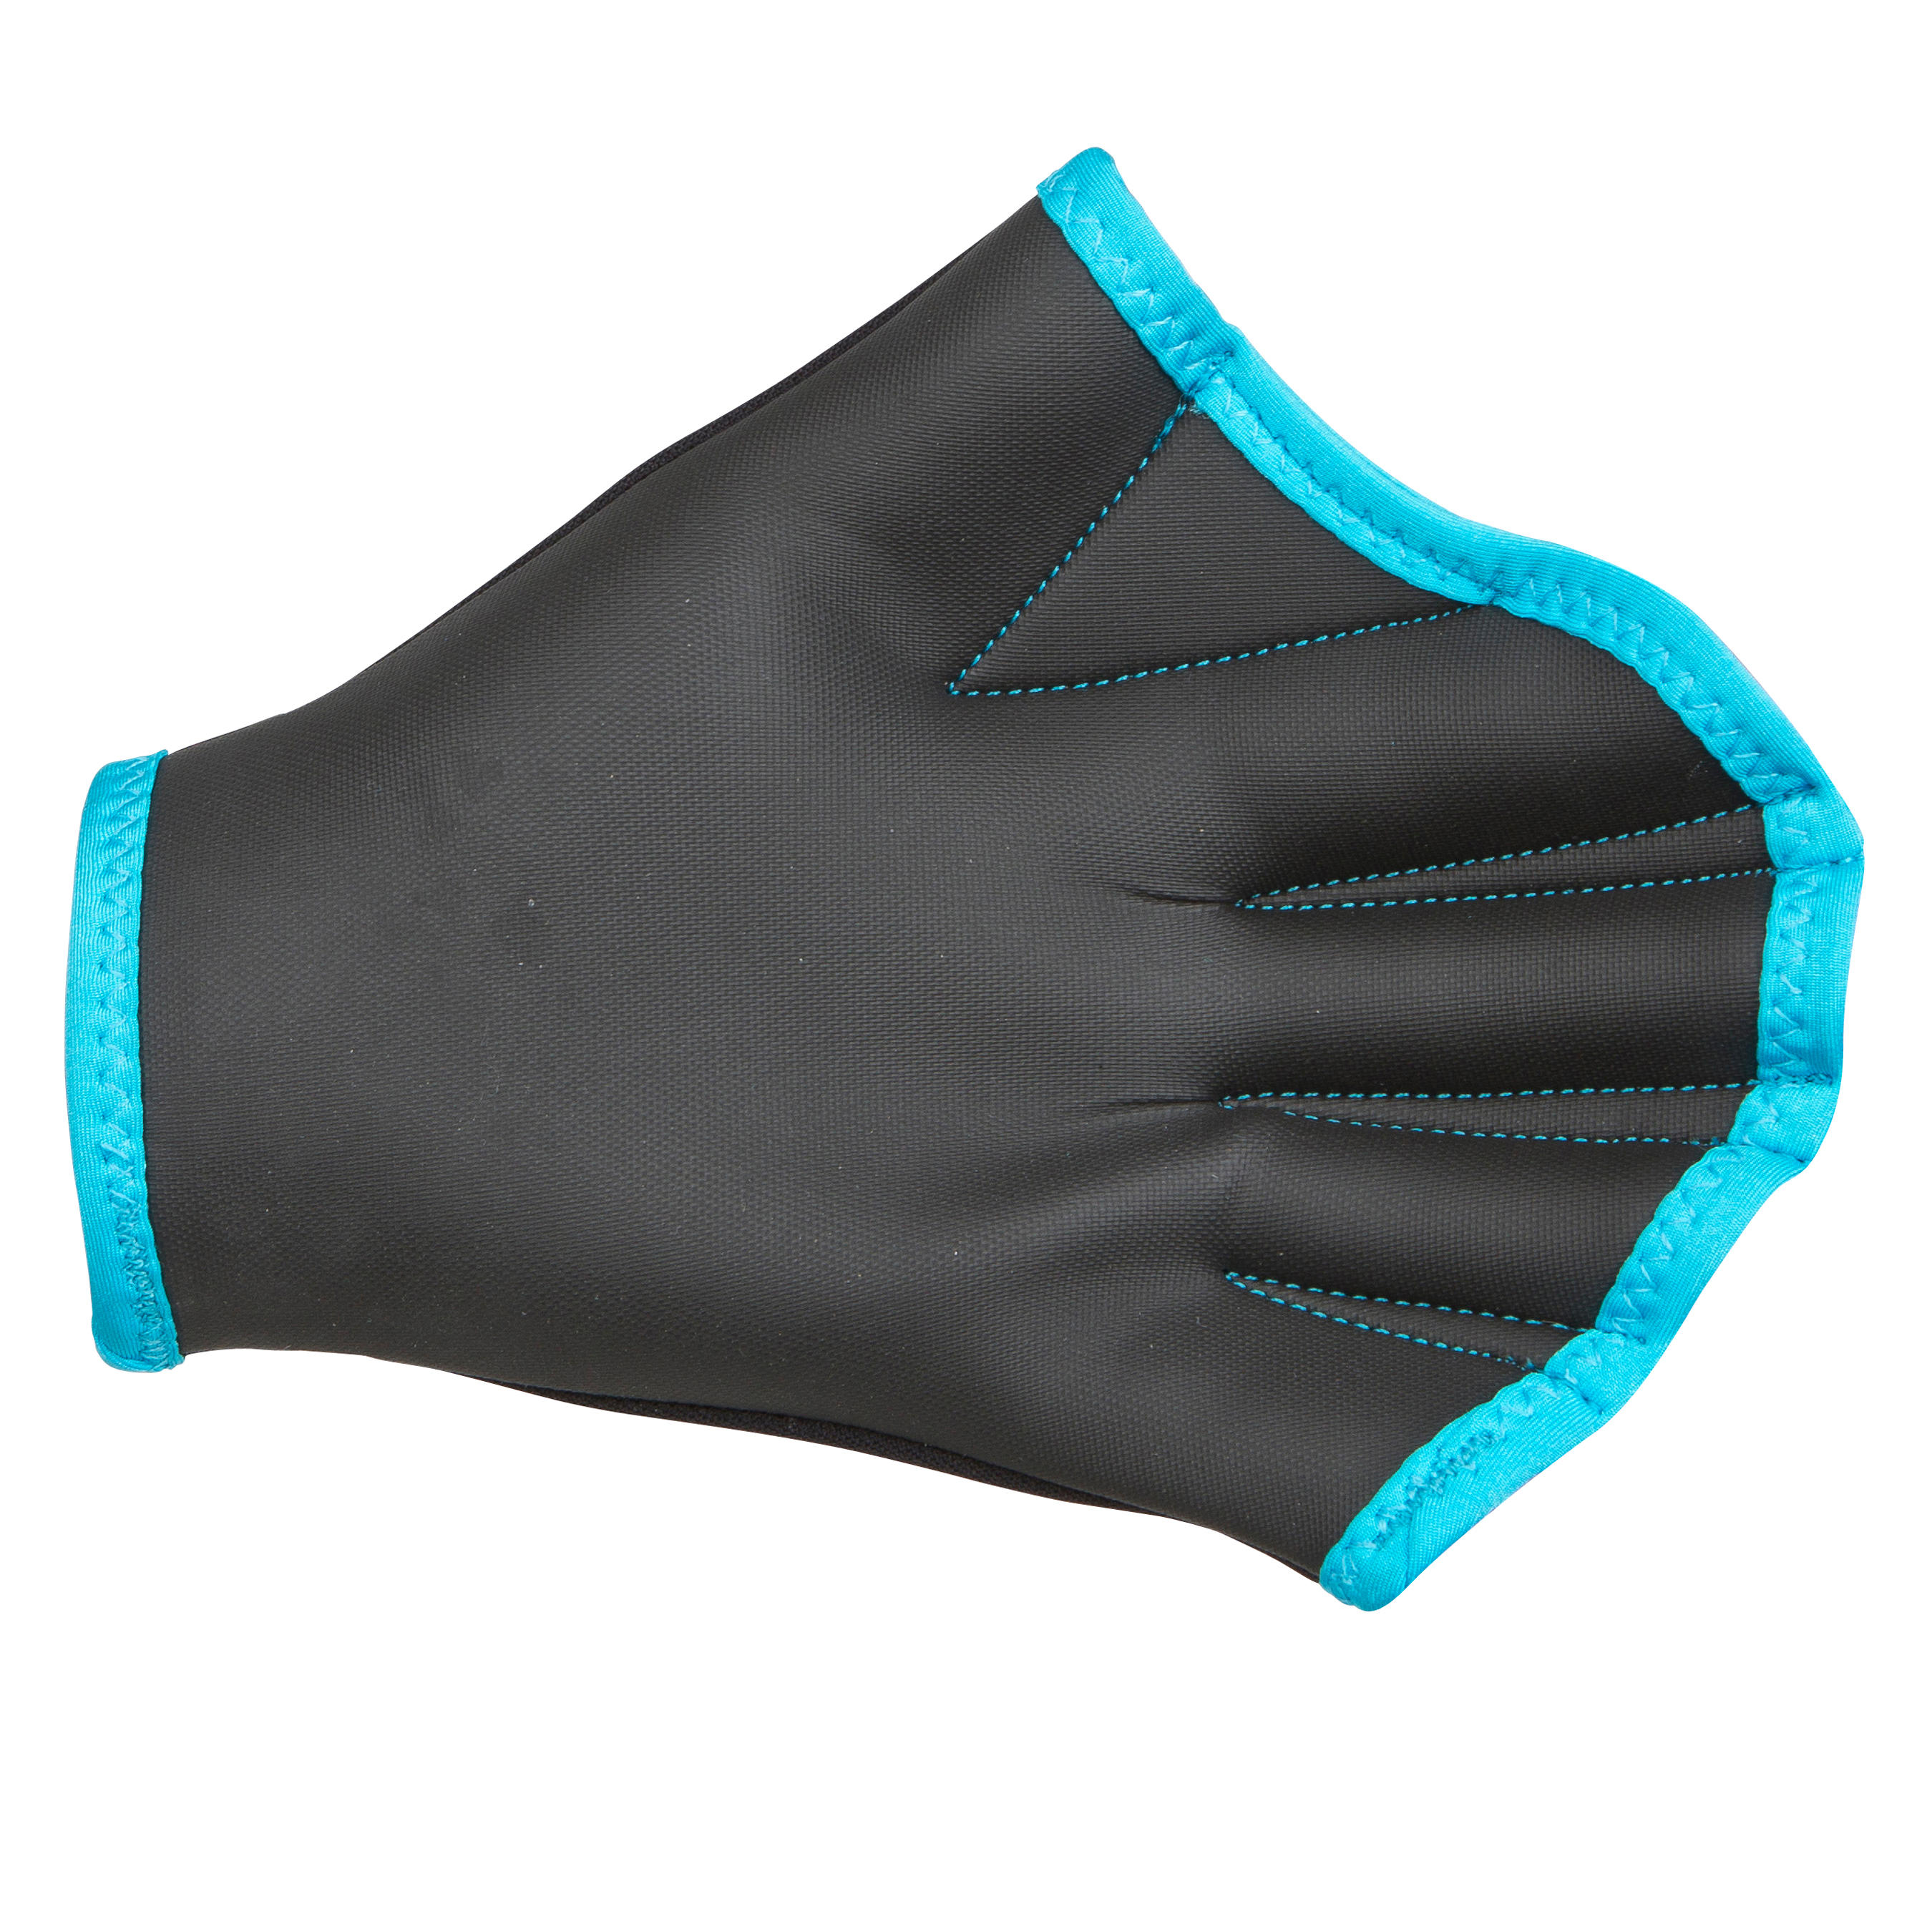 Webbed Aquafitness Gloves Blue 5/10